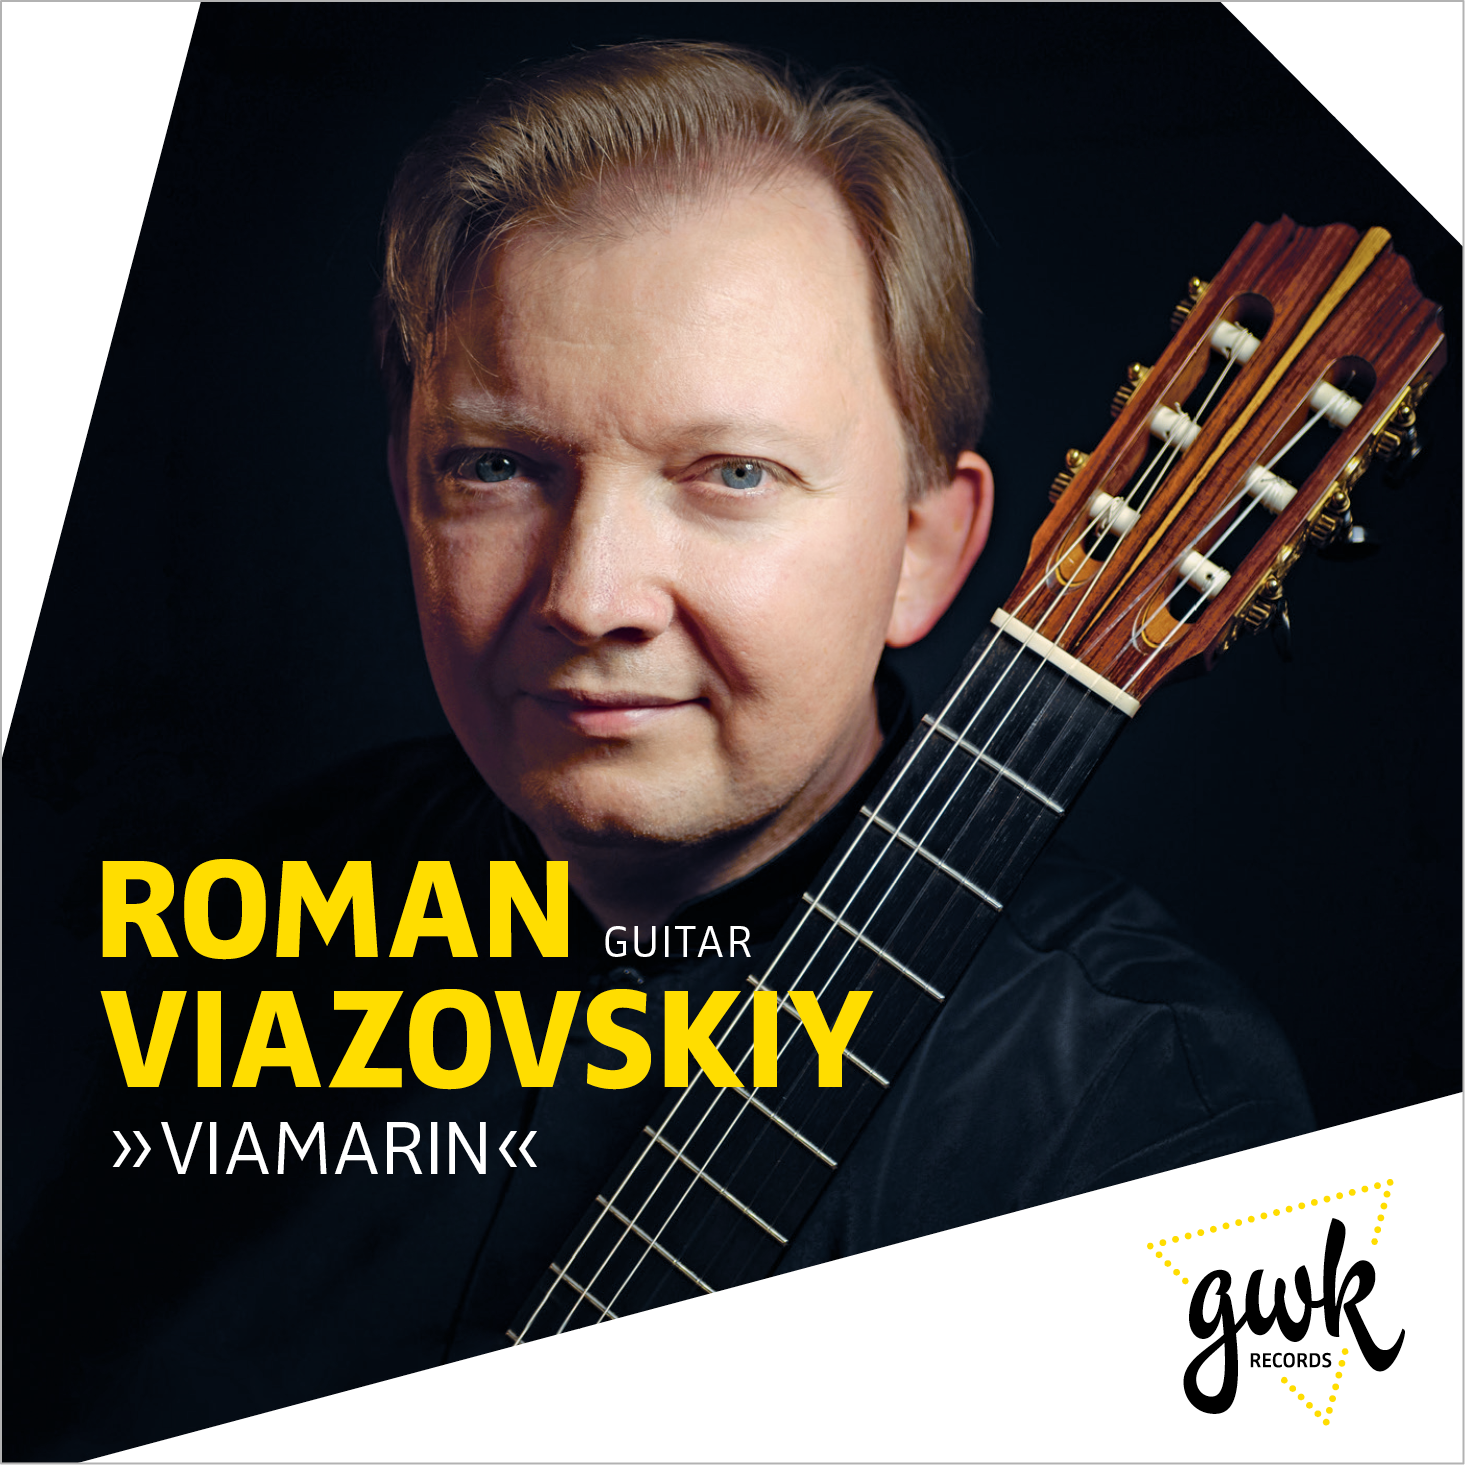 Roman Viazovskiy (Gitarre)